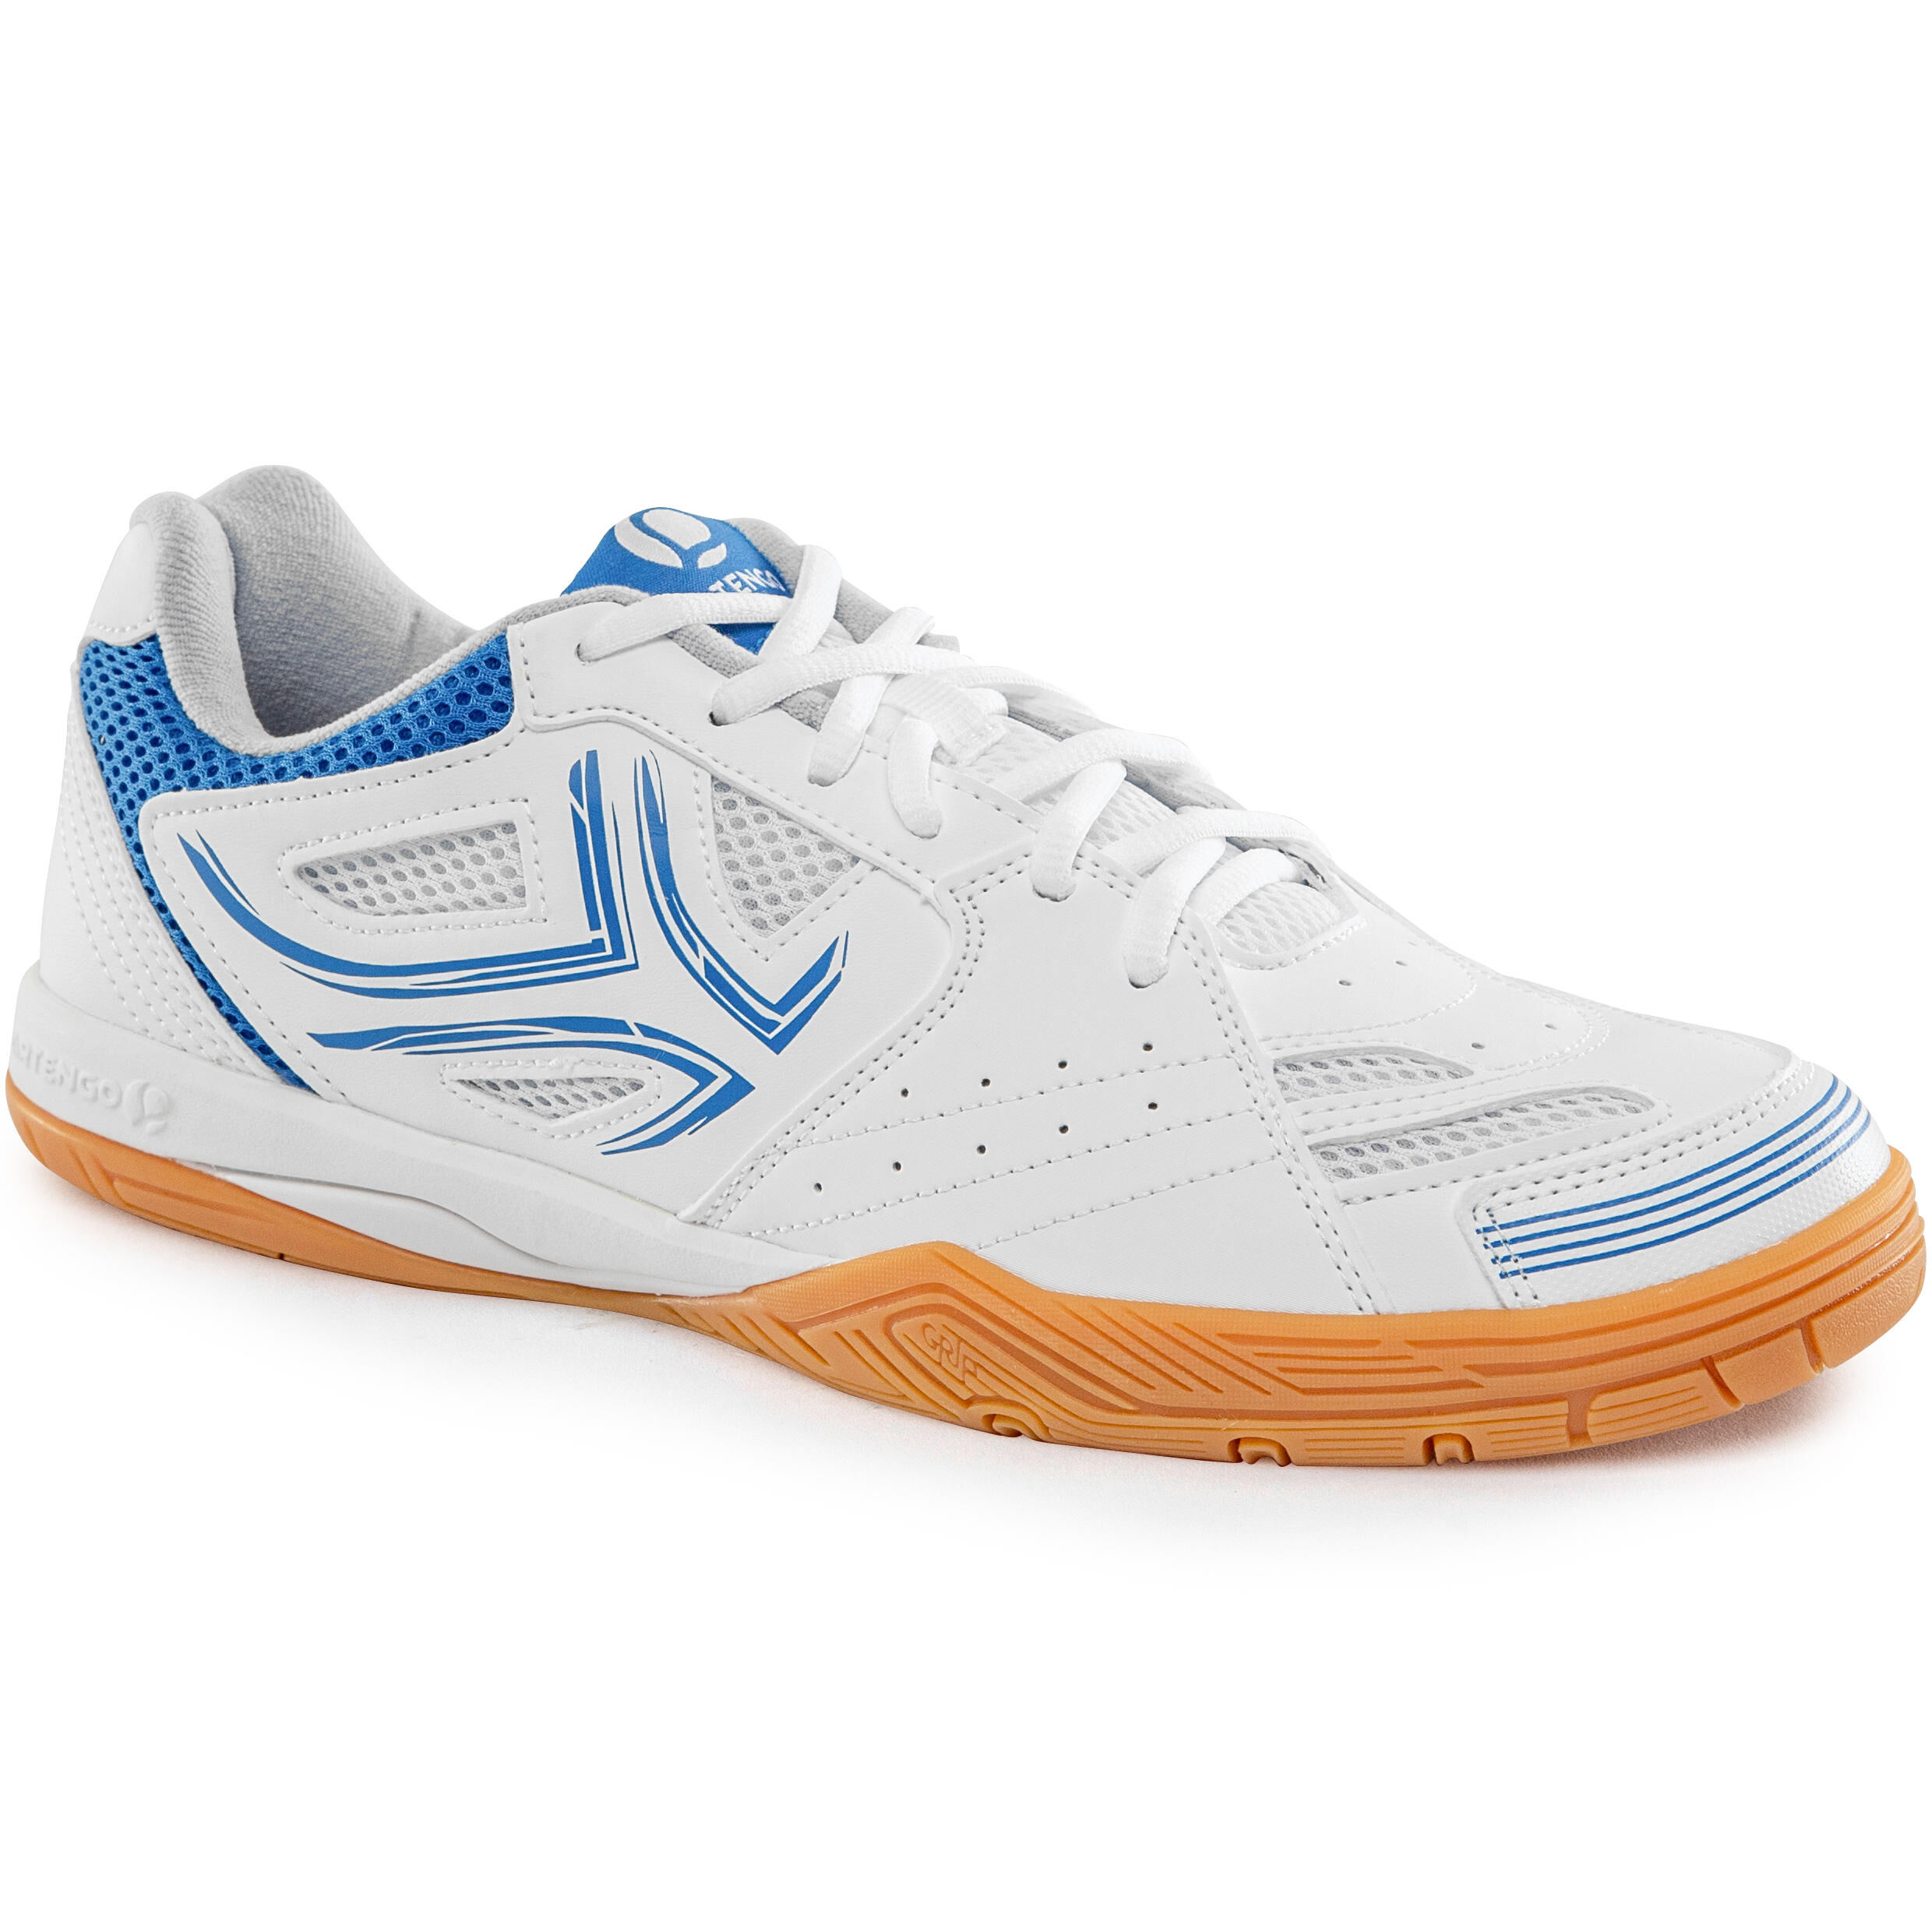 PONGORI TTS 500 Table Tennis Shoes - White